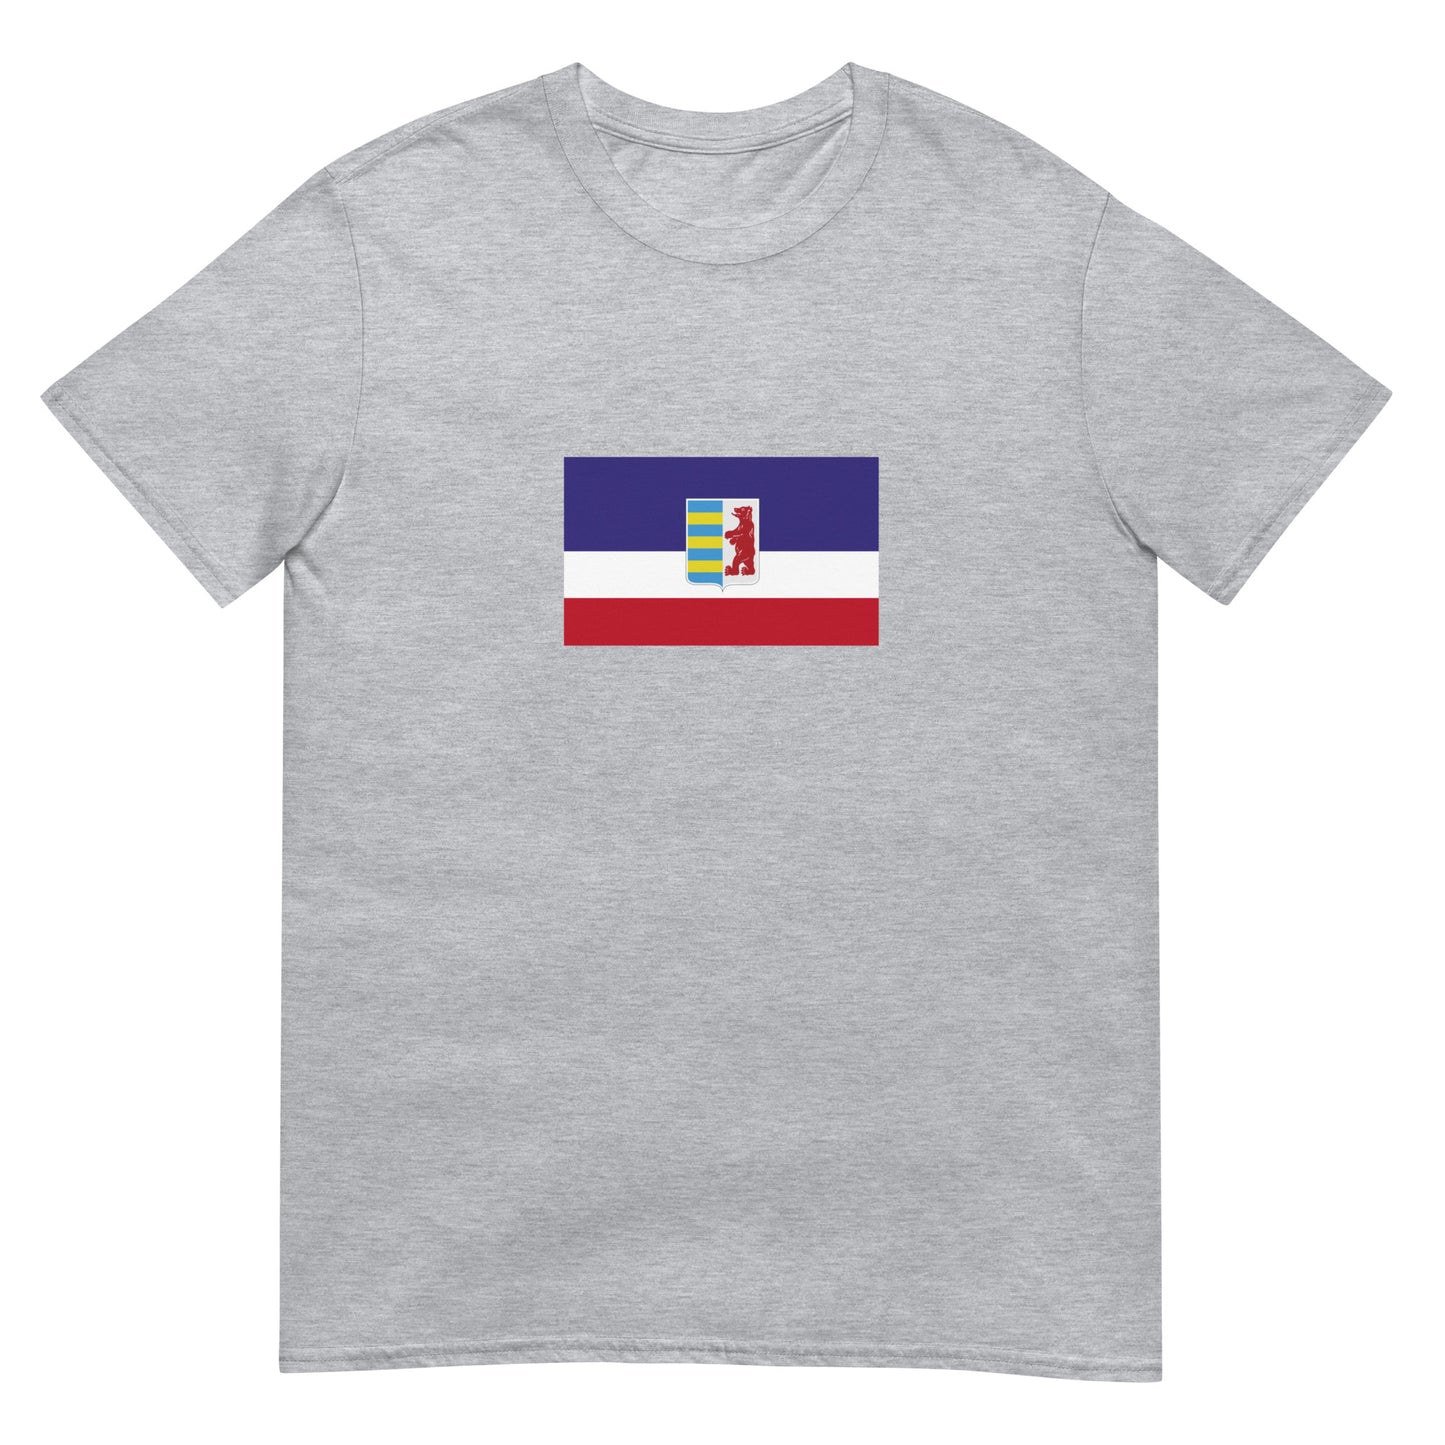 Serbia - Rusnys | Ethnic Flag Short-Sleeve Unisex T-Shirt